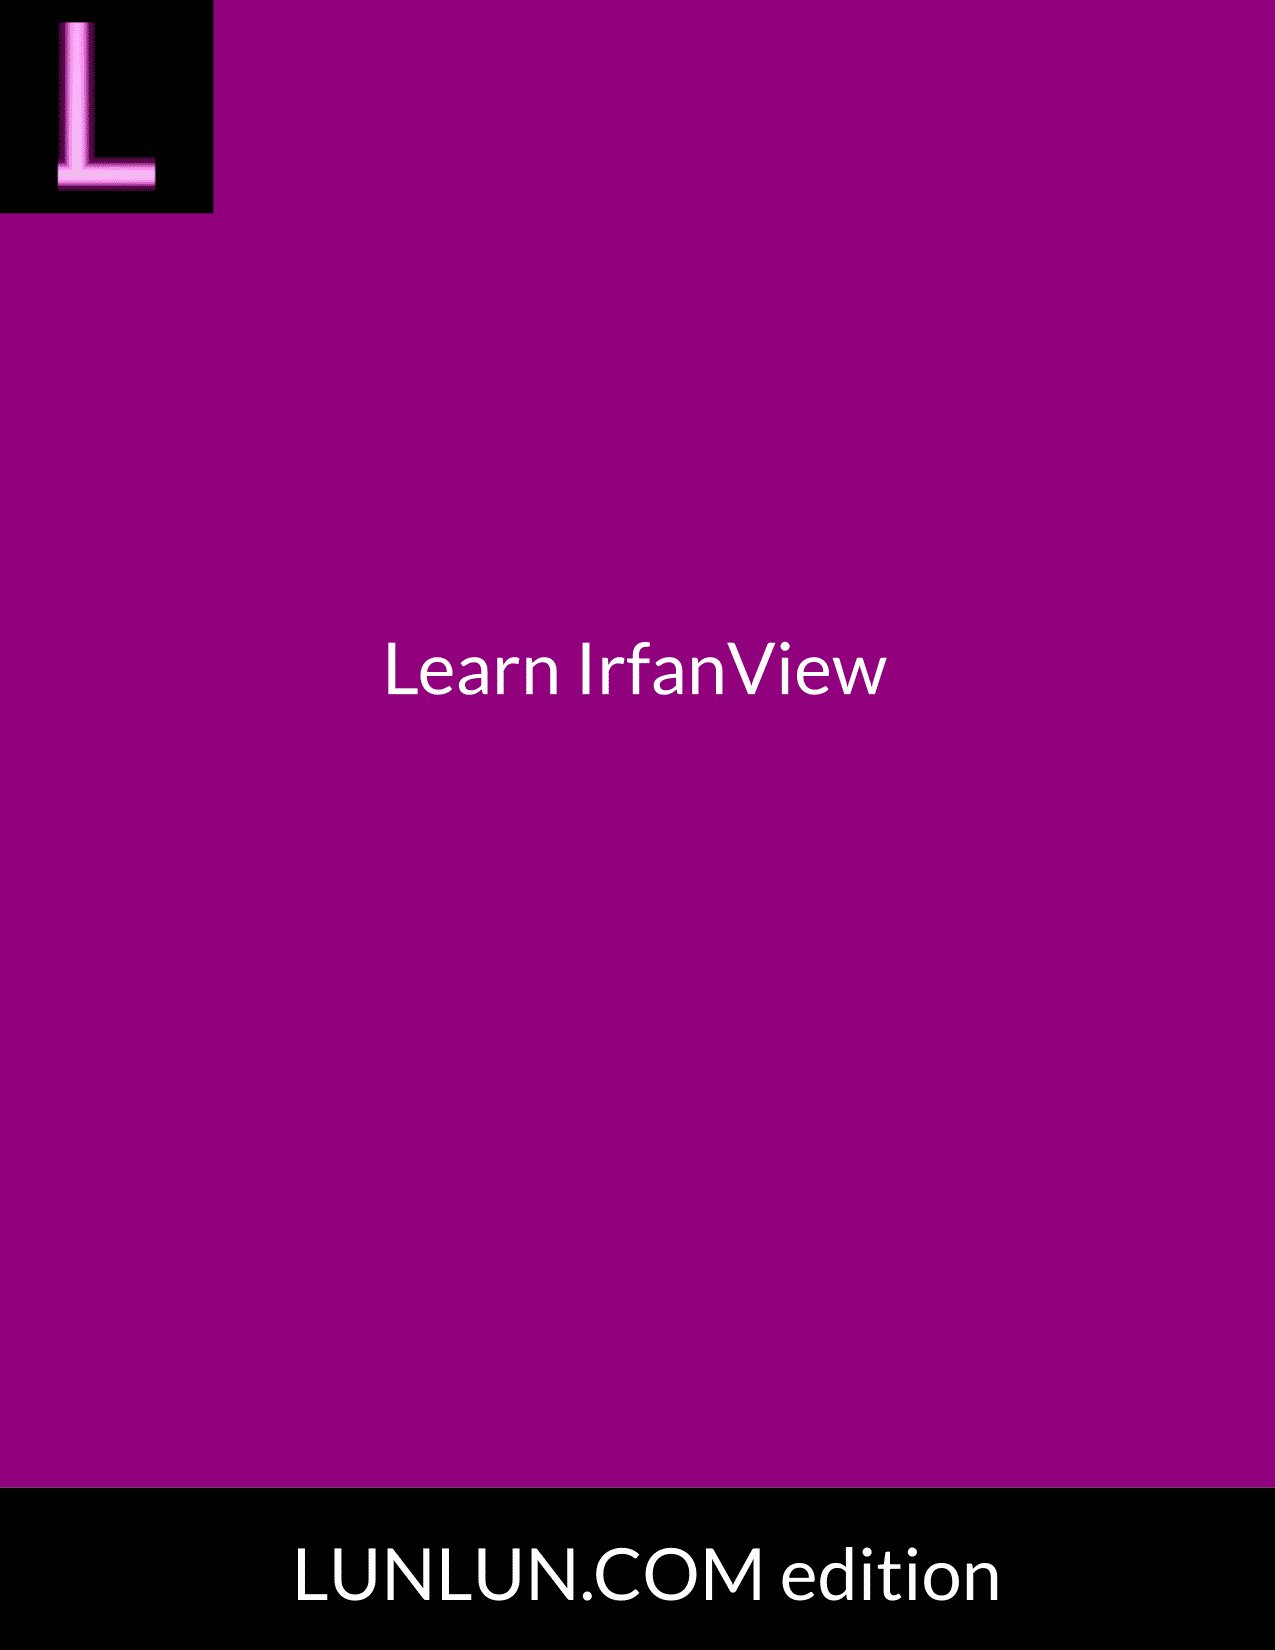 Learn IrfanView (LUNLUN.COM edition)